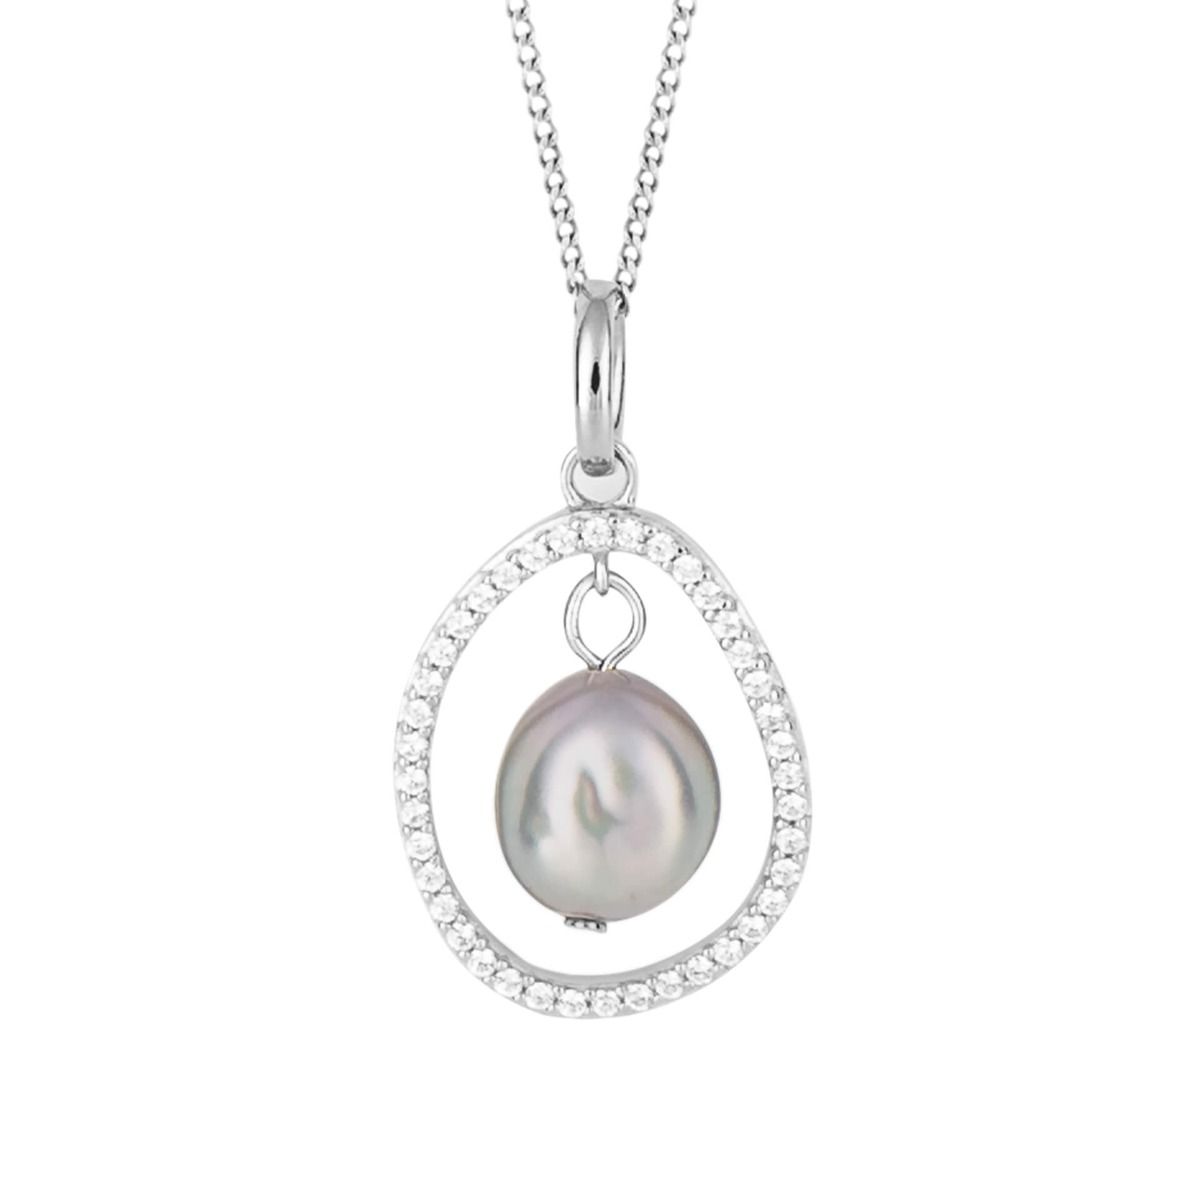 Fiorelli silver, keshi pearl and cubic zirconia oval pendant